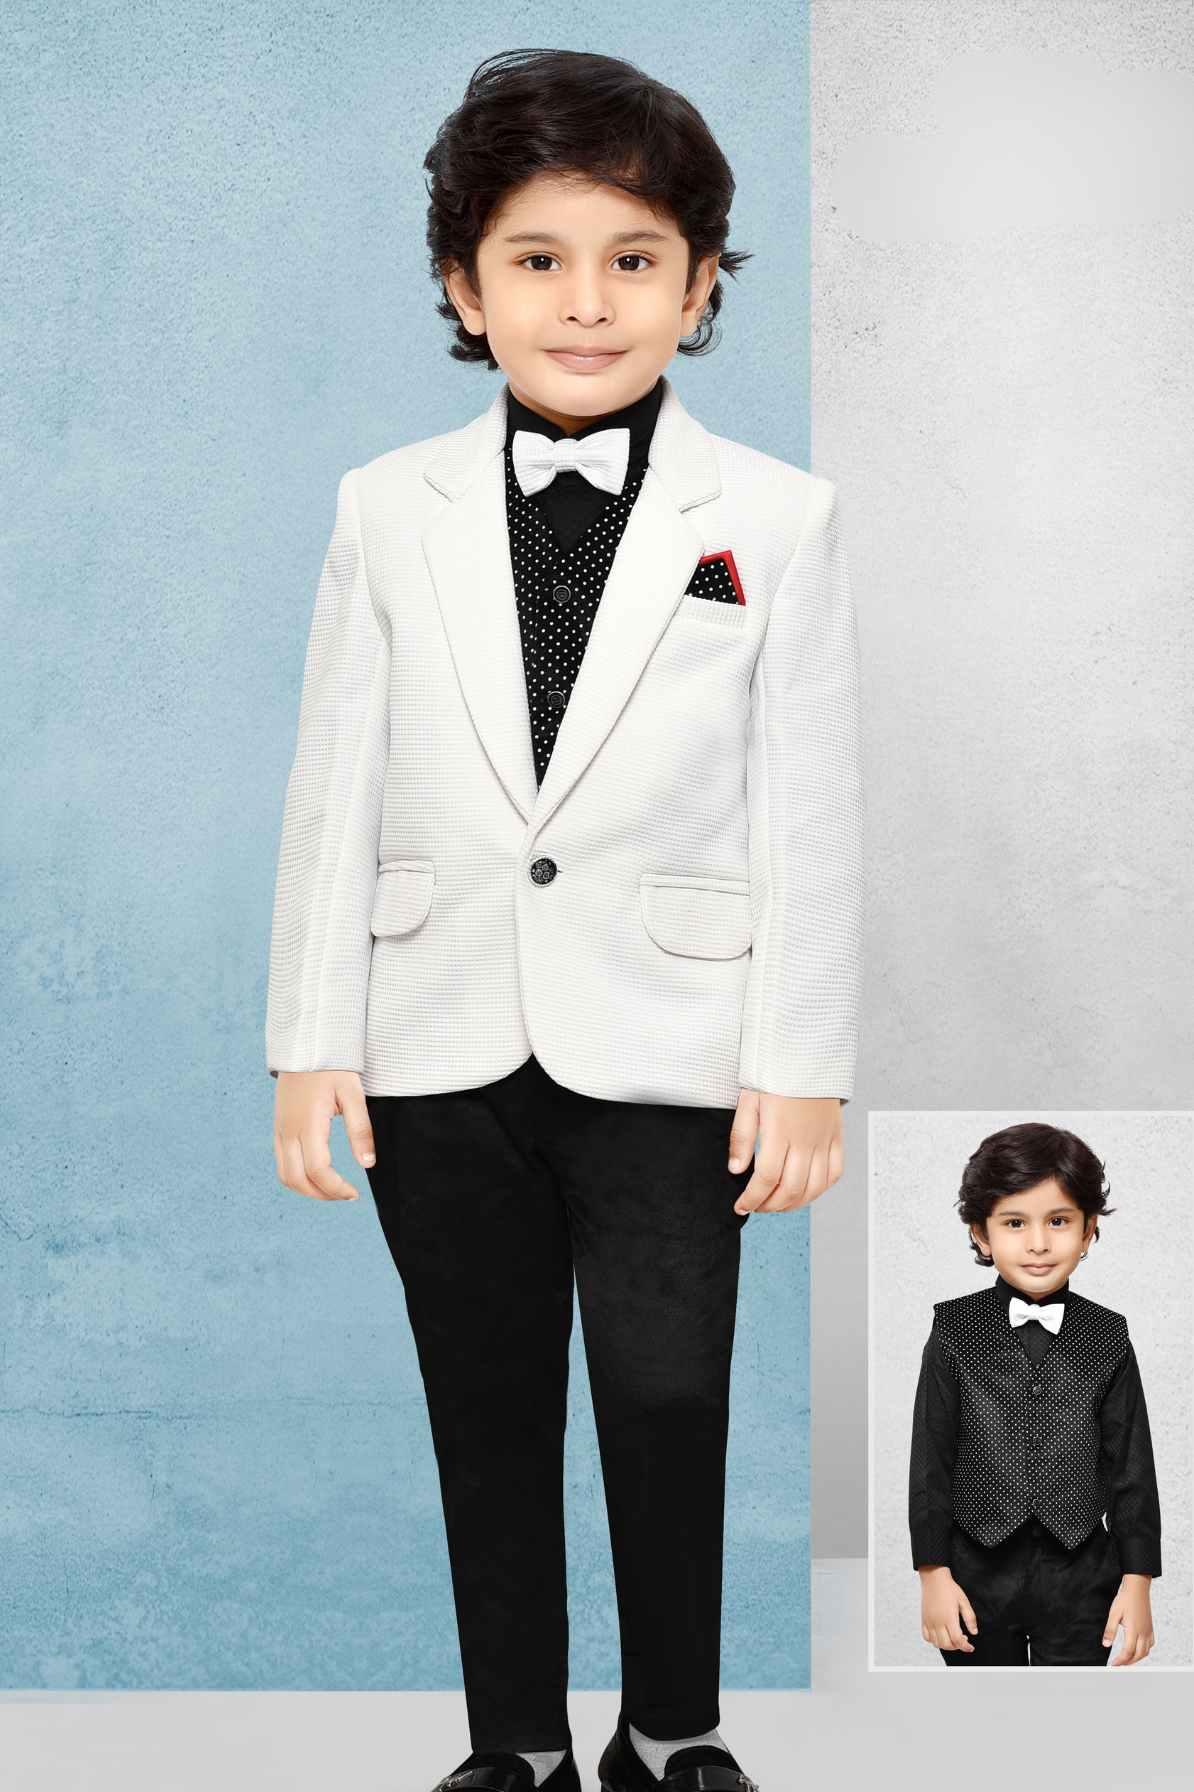 White Tuxedo With Black Pant for Boys - Lagorii Kids